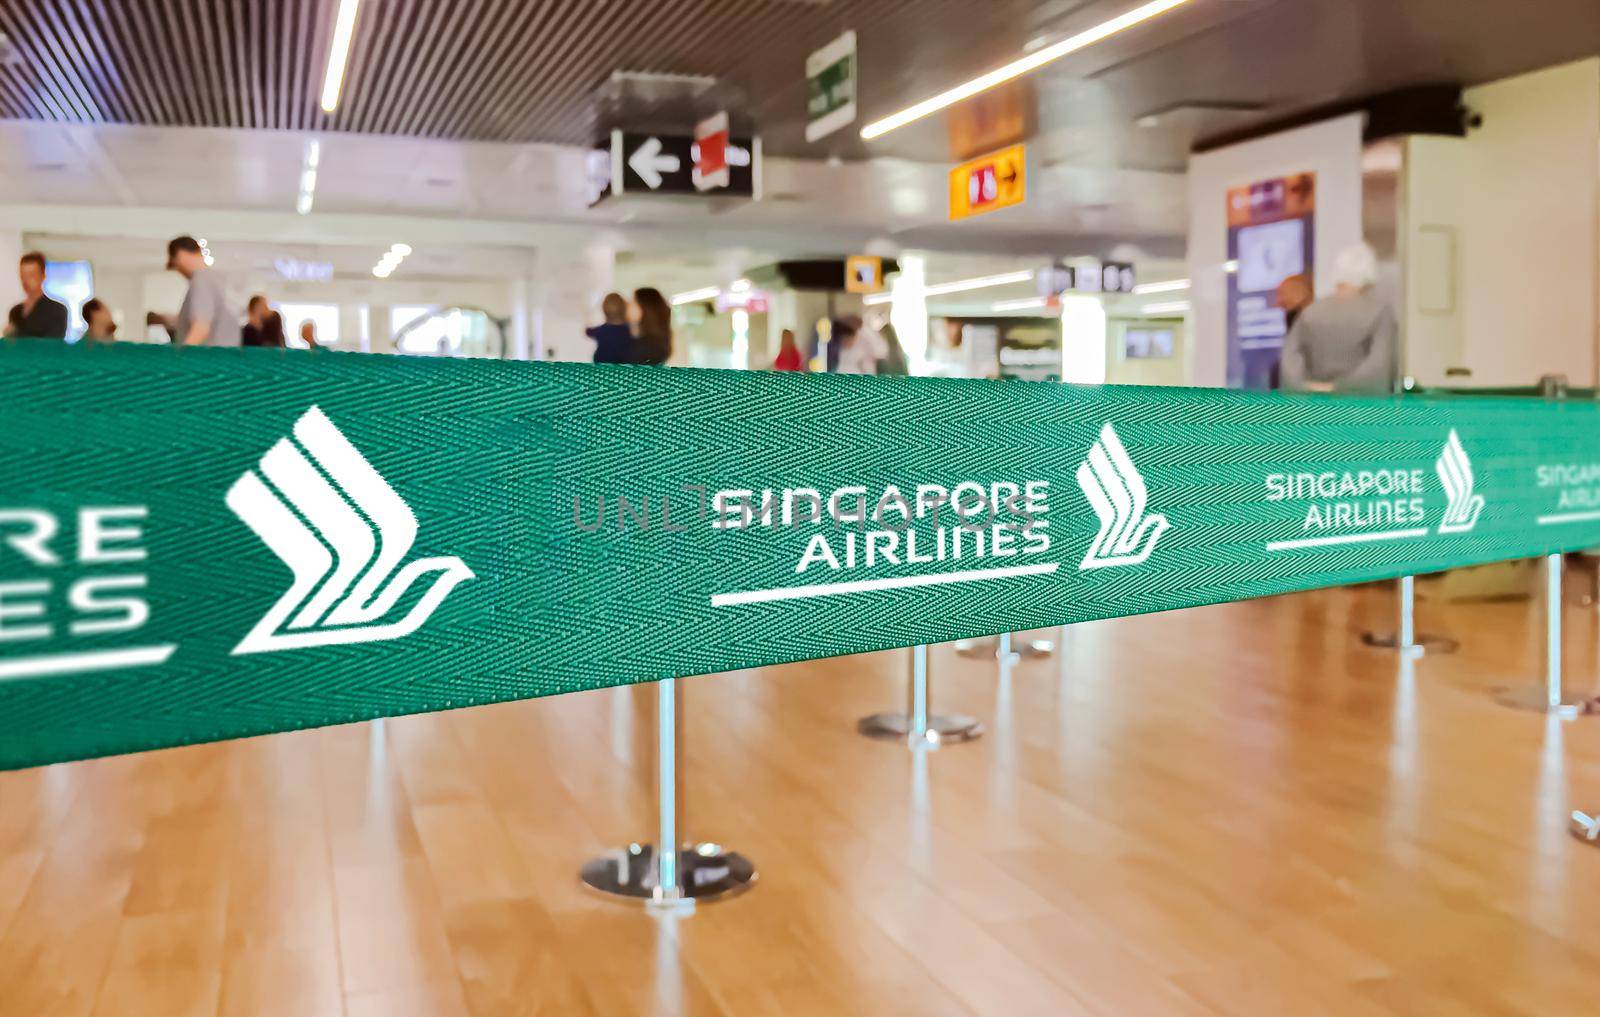 Fiumicino, Italy, July 2019: Green ribbon barrier with the Singapore Airlines logo inside the Leonardo da Vinci international airport in Rome Fiumicino in Italy by rarrarorro